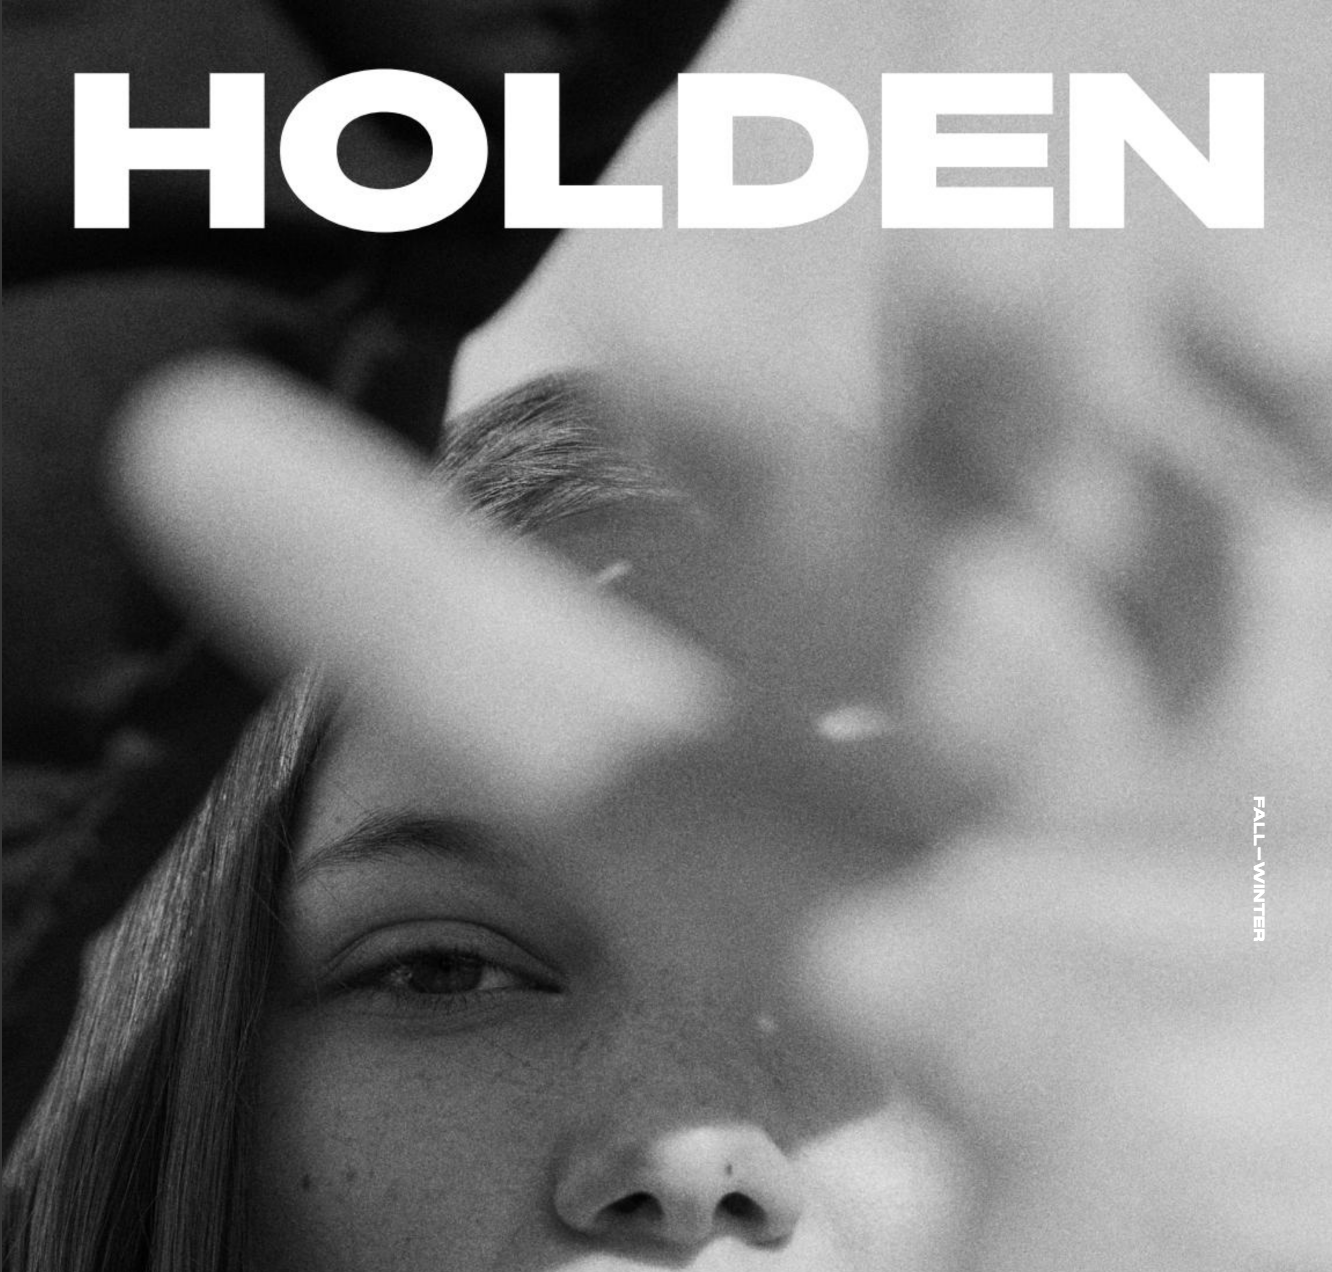 Holden - FW19 Outerwear